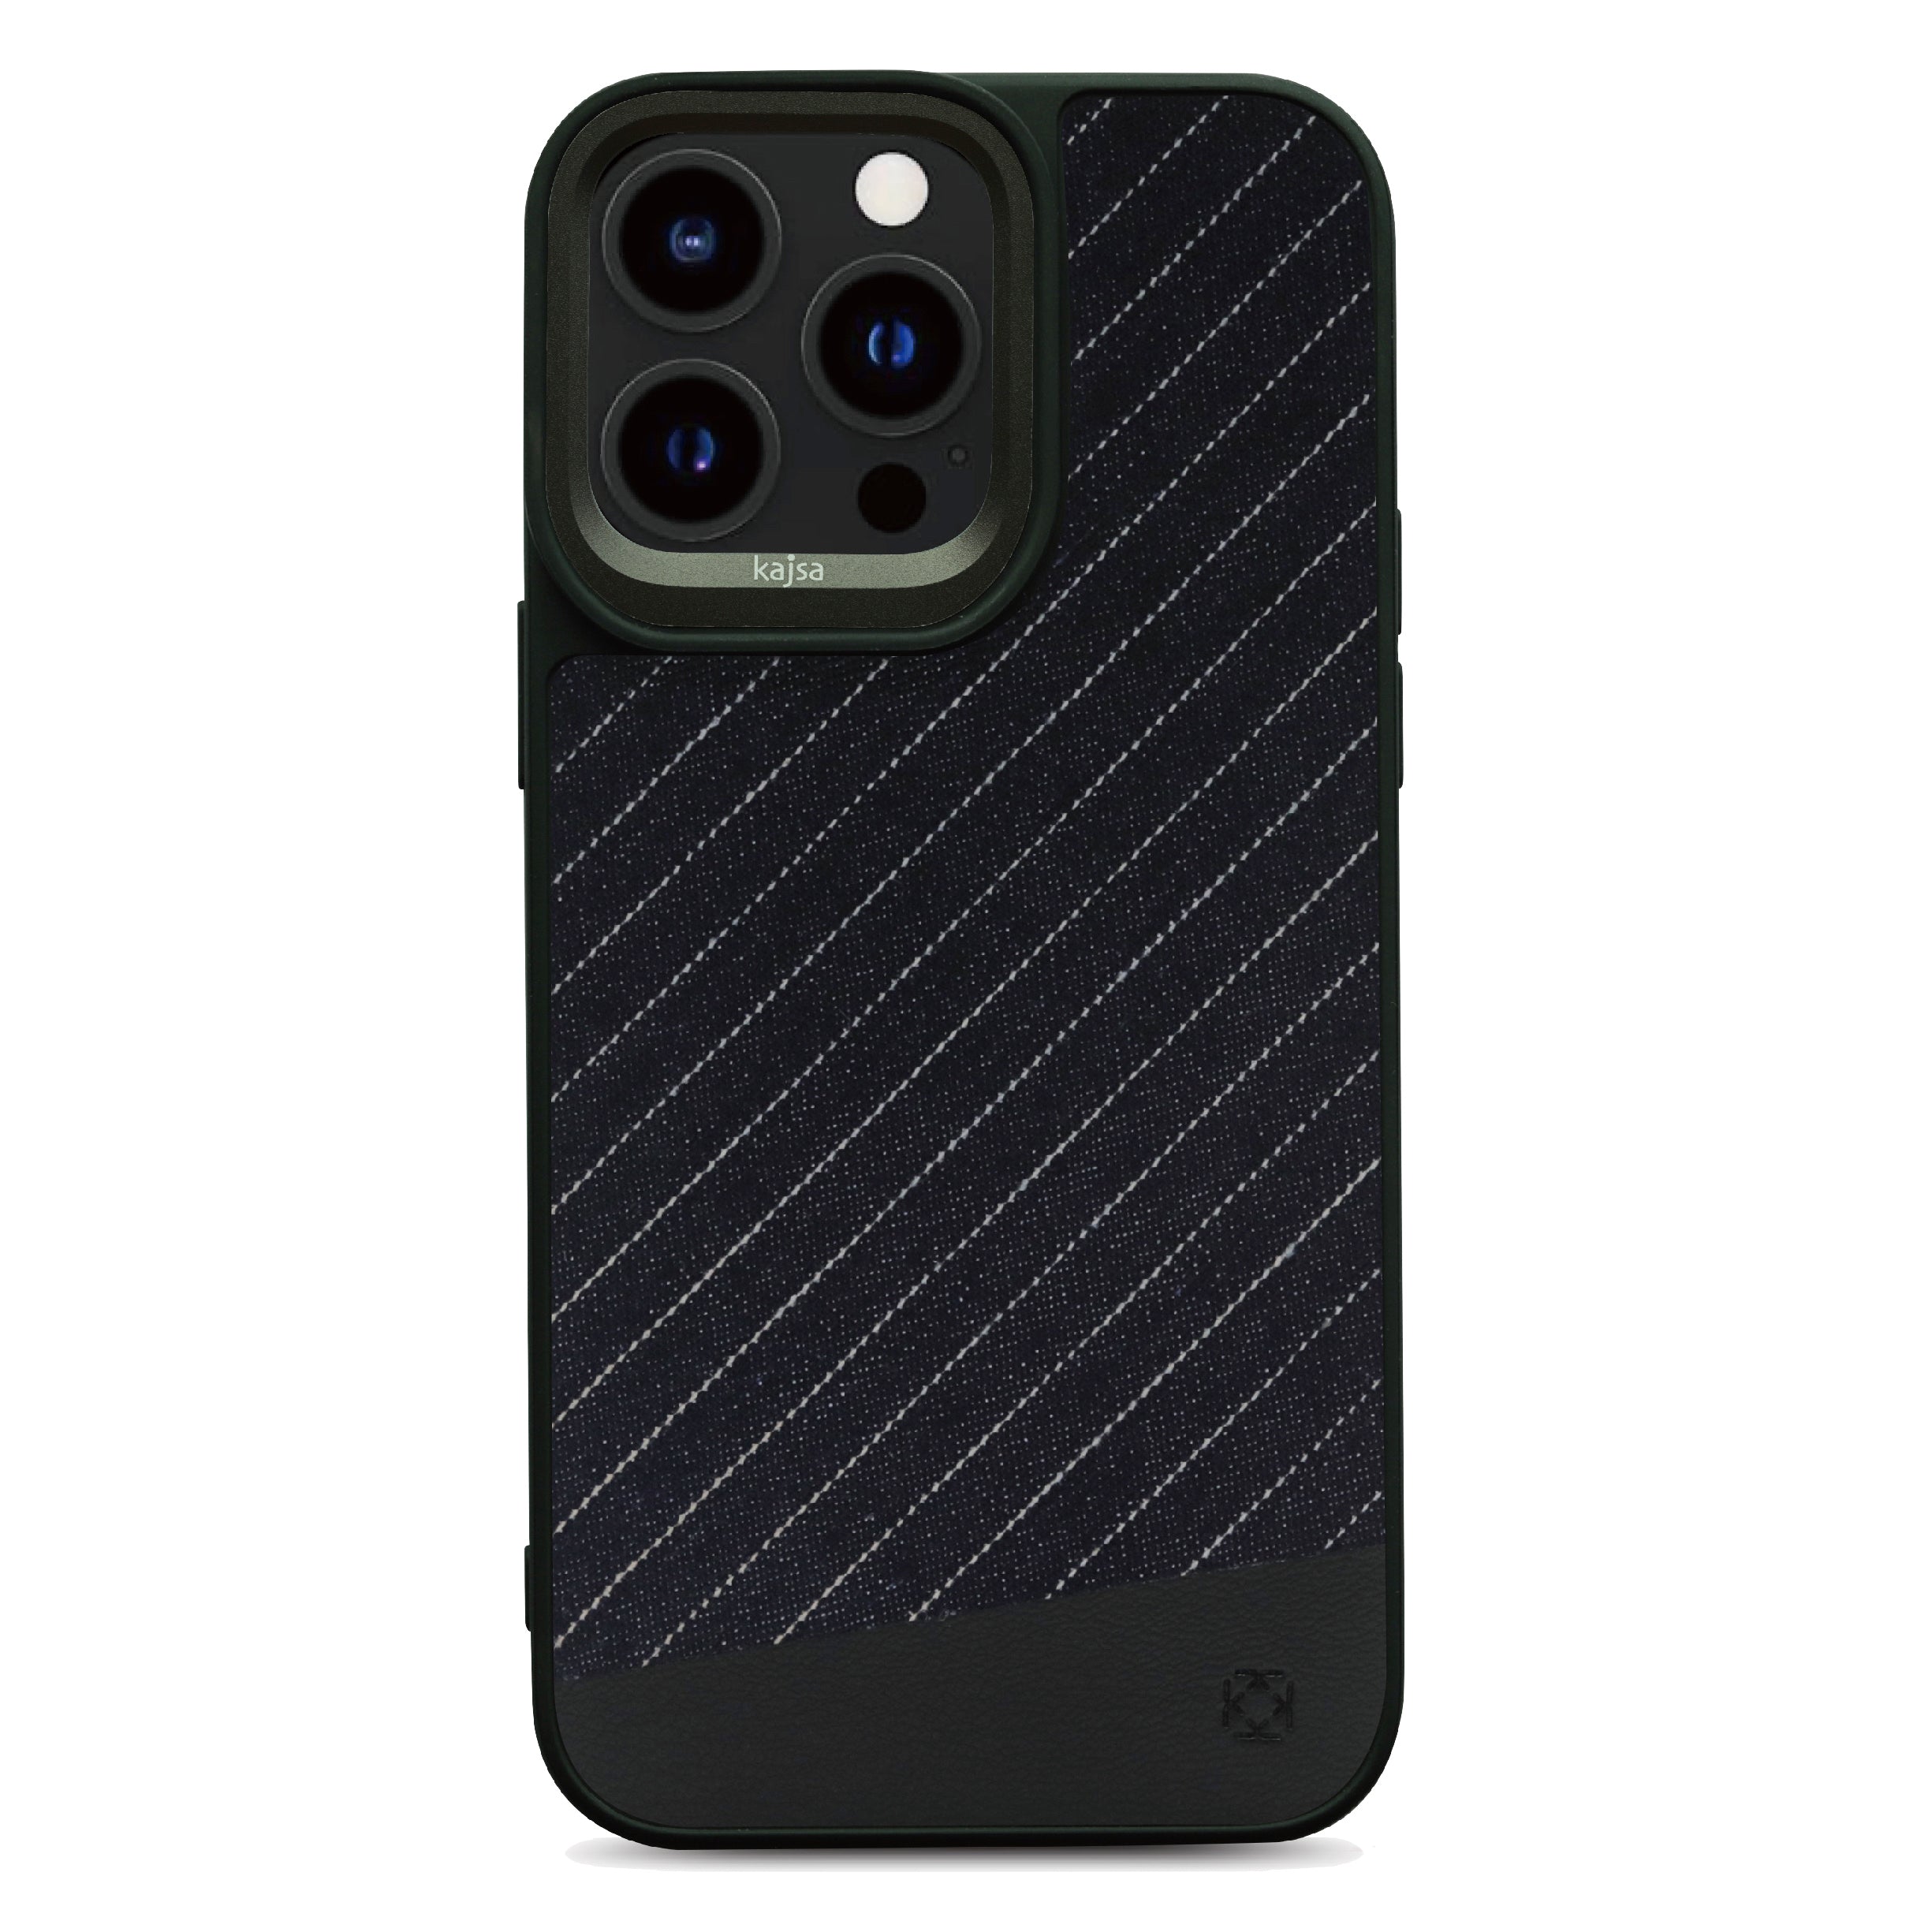 Denim Collection - Stripe Gentleman Back Case for iPhone 15